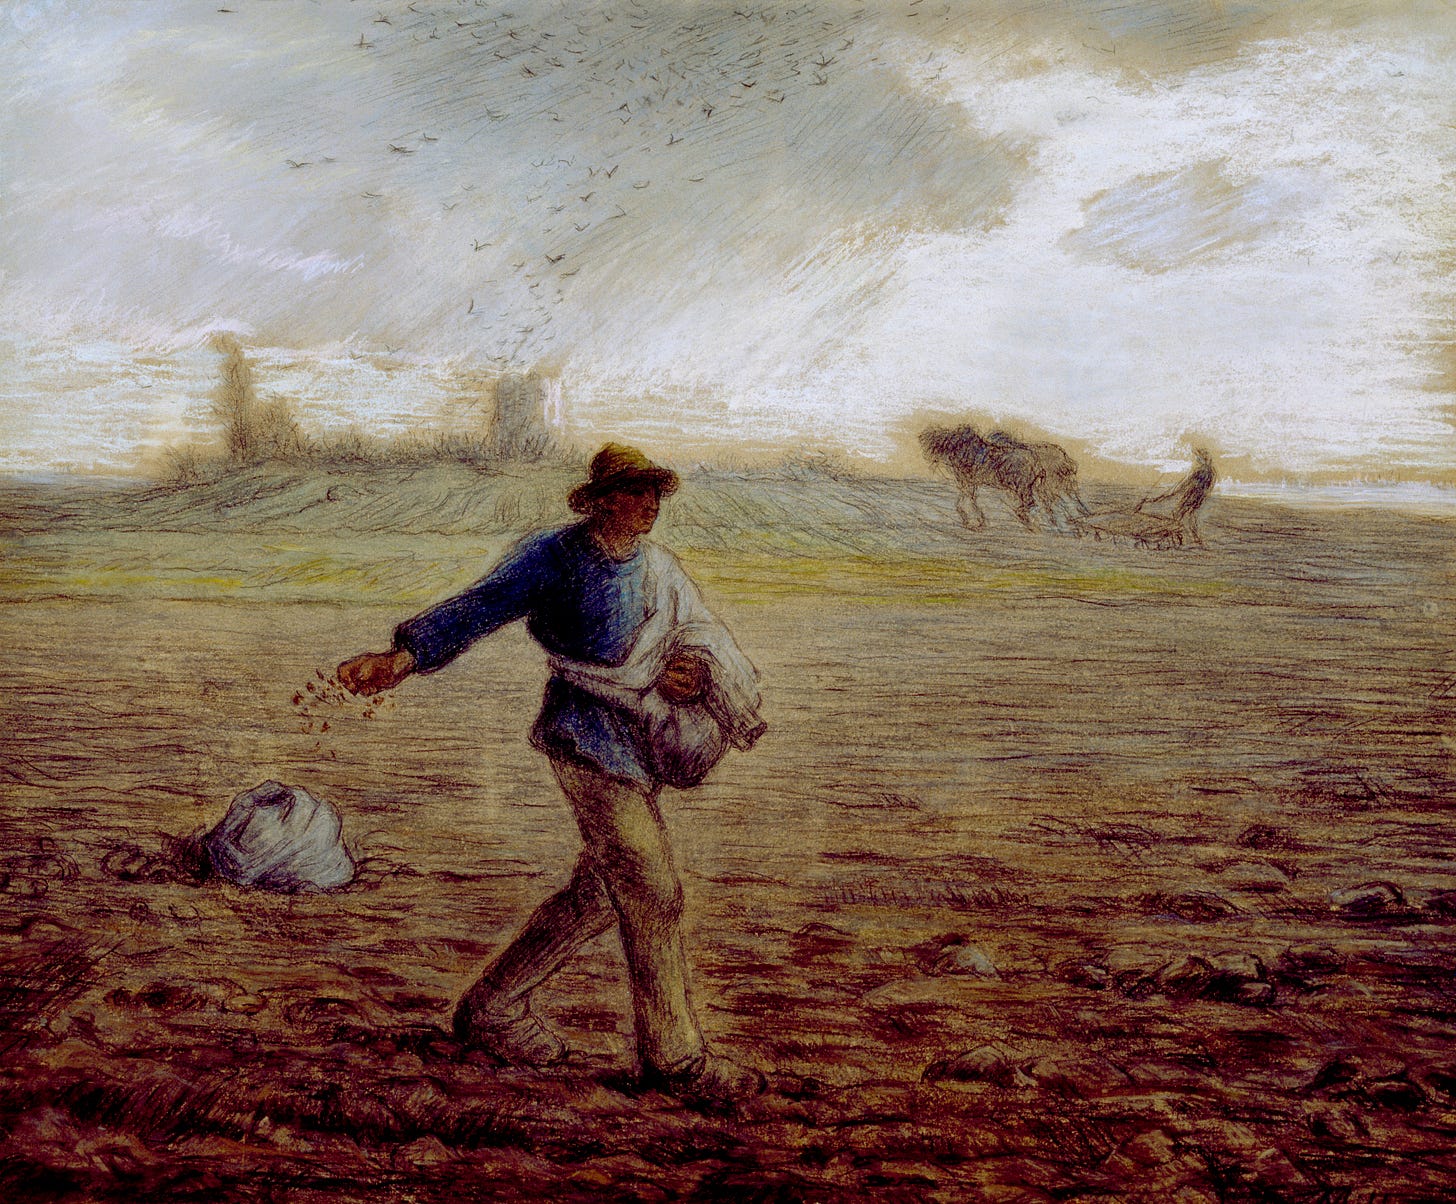 File:Jean-François Millet - The Sower - Walters 37905.jpg - Wikimedia  Commons